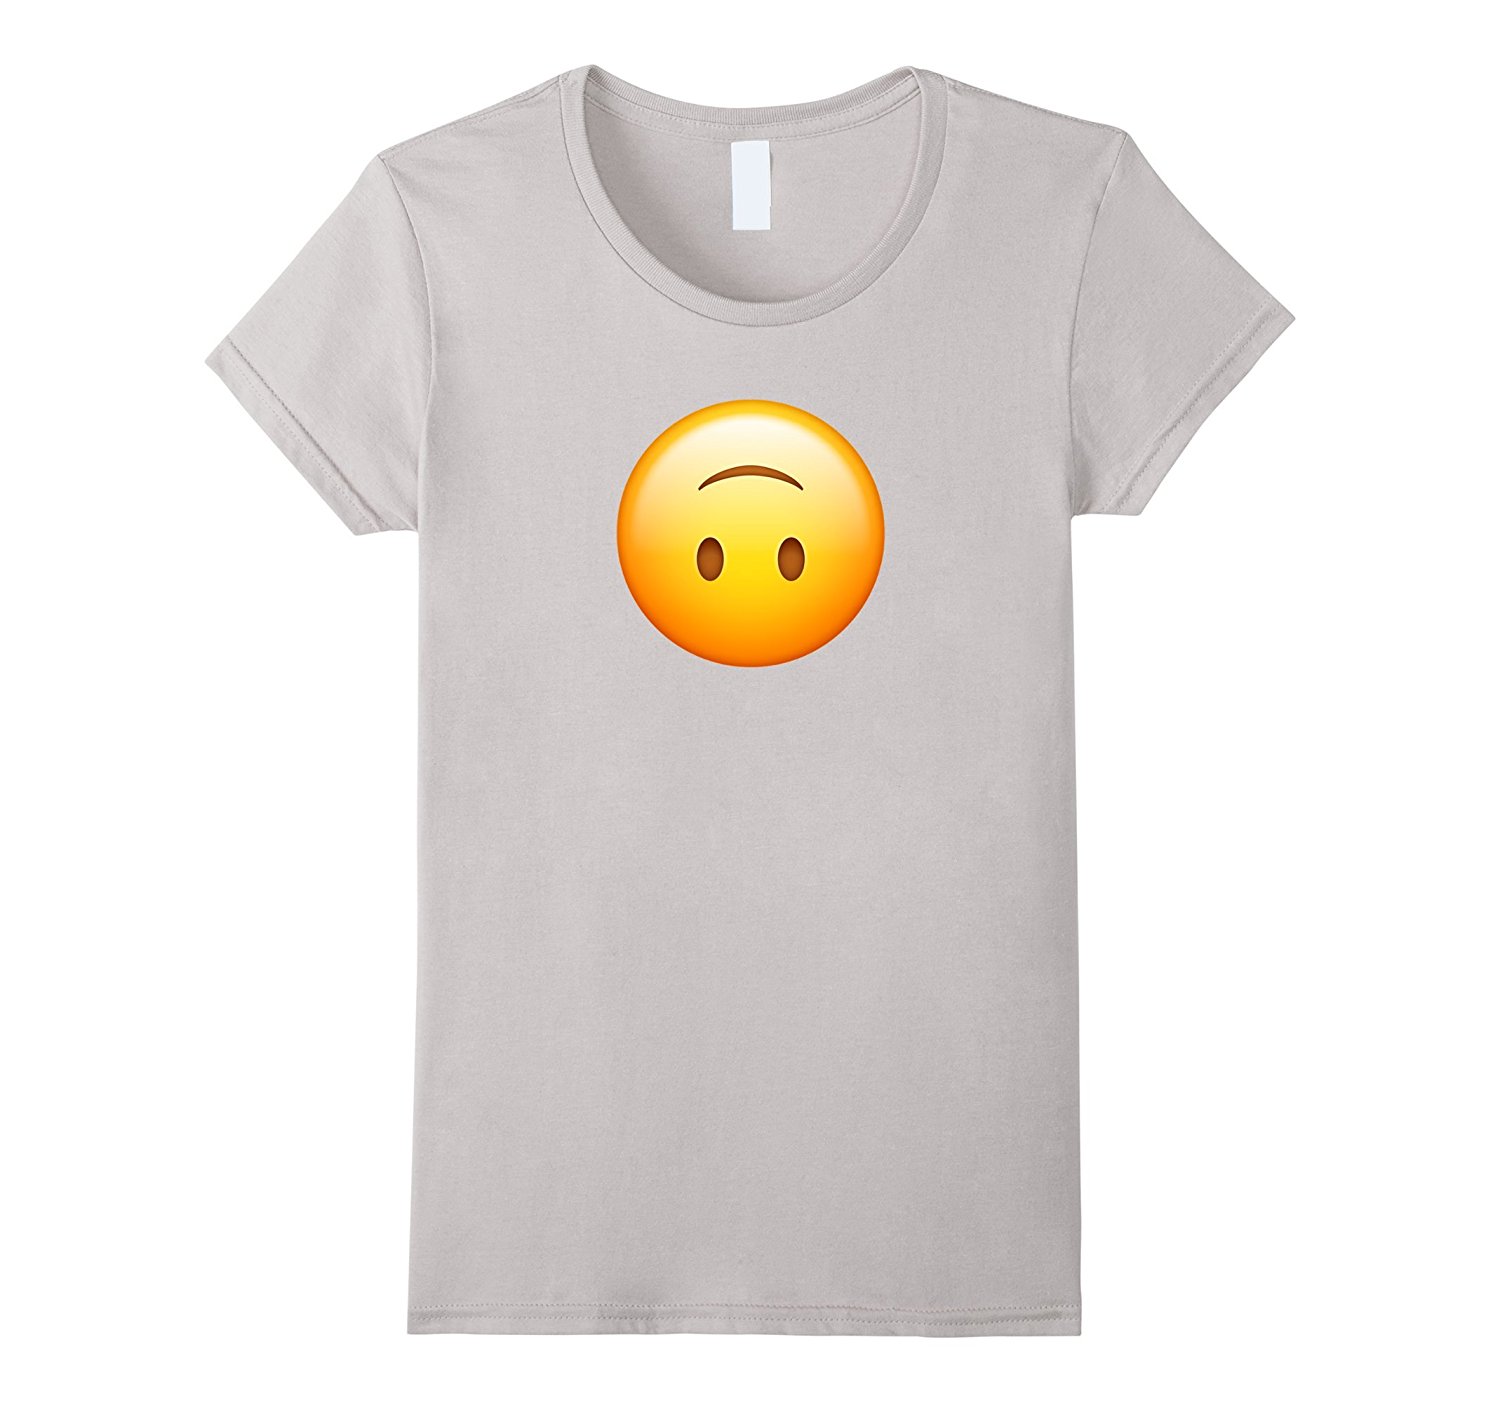 Classic Smiley Face Design Emoji Graphic Quality t-shirt tee mens unisex